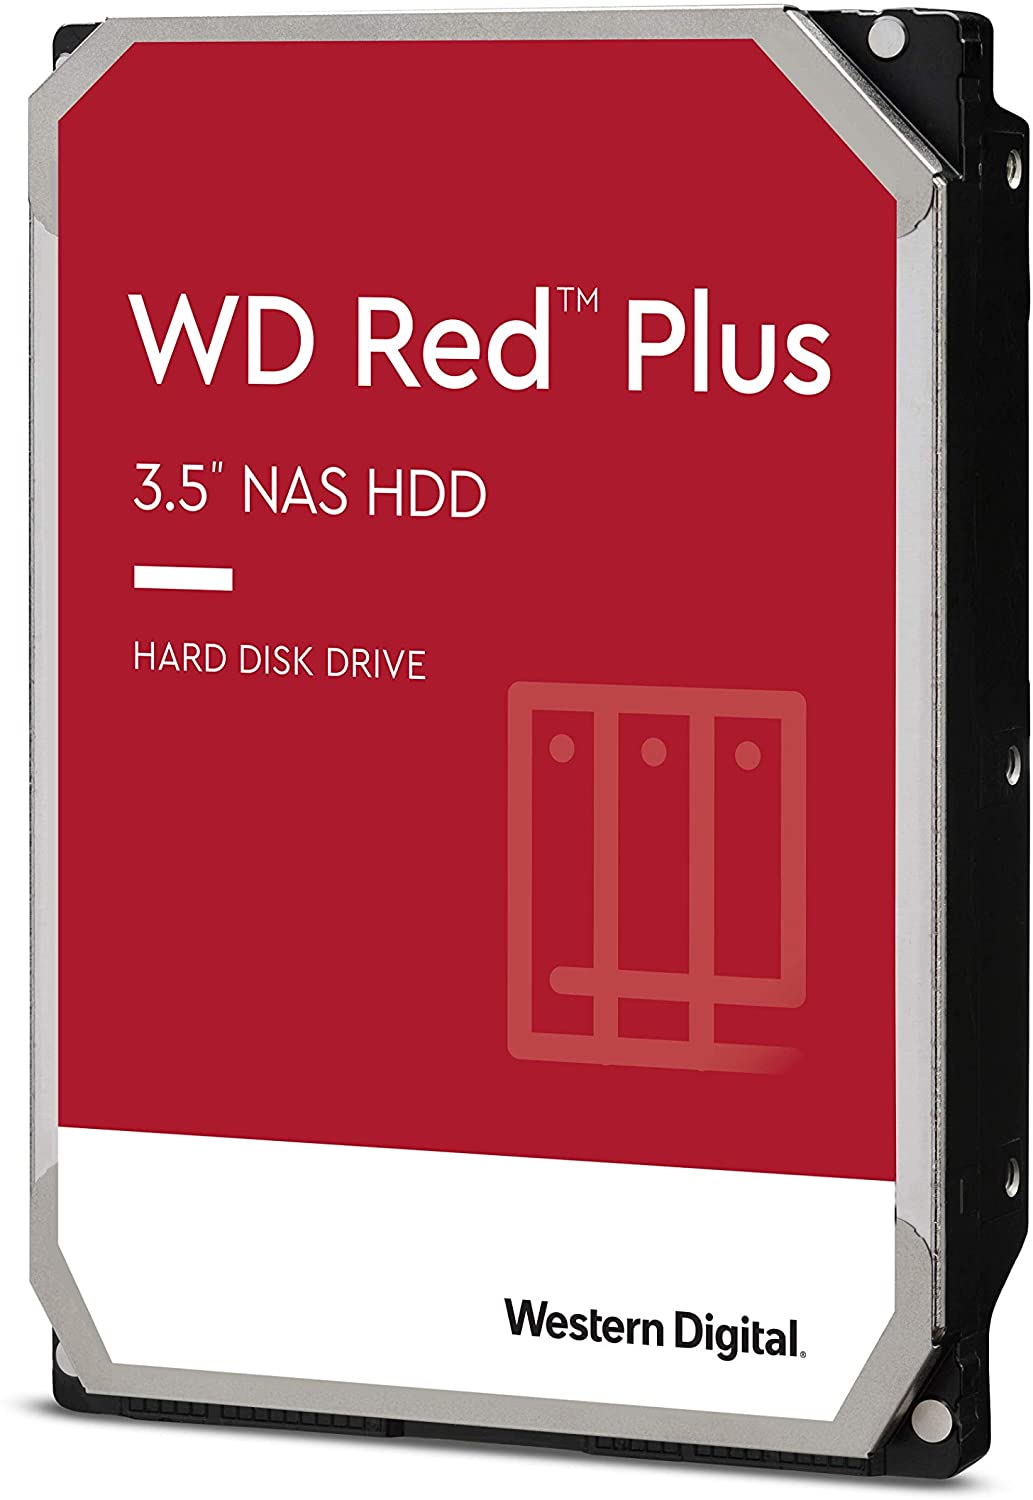 Amazon - Western Digital 10TB WD Red Plus NAS Hard Drive, 3.5",  7200 RPM - $209.99